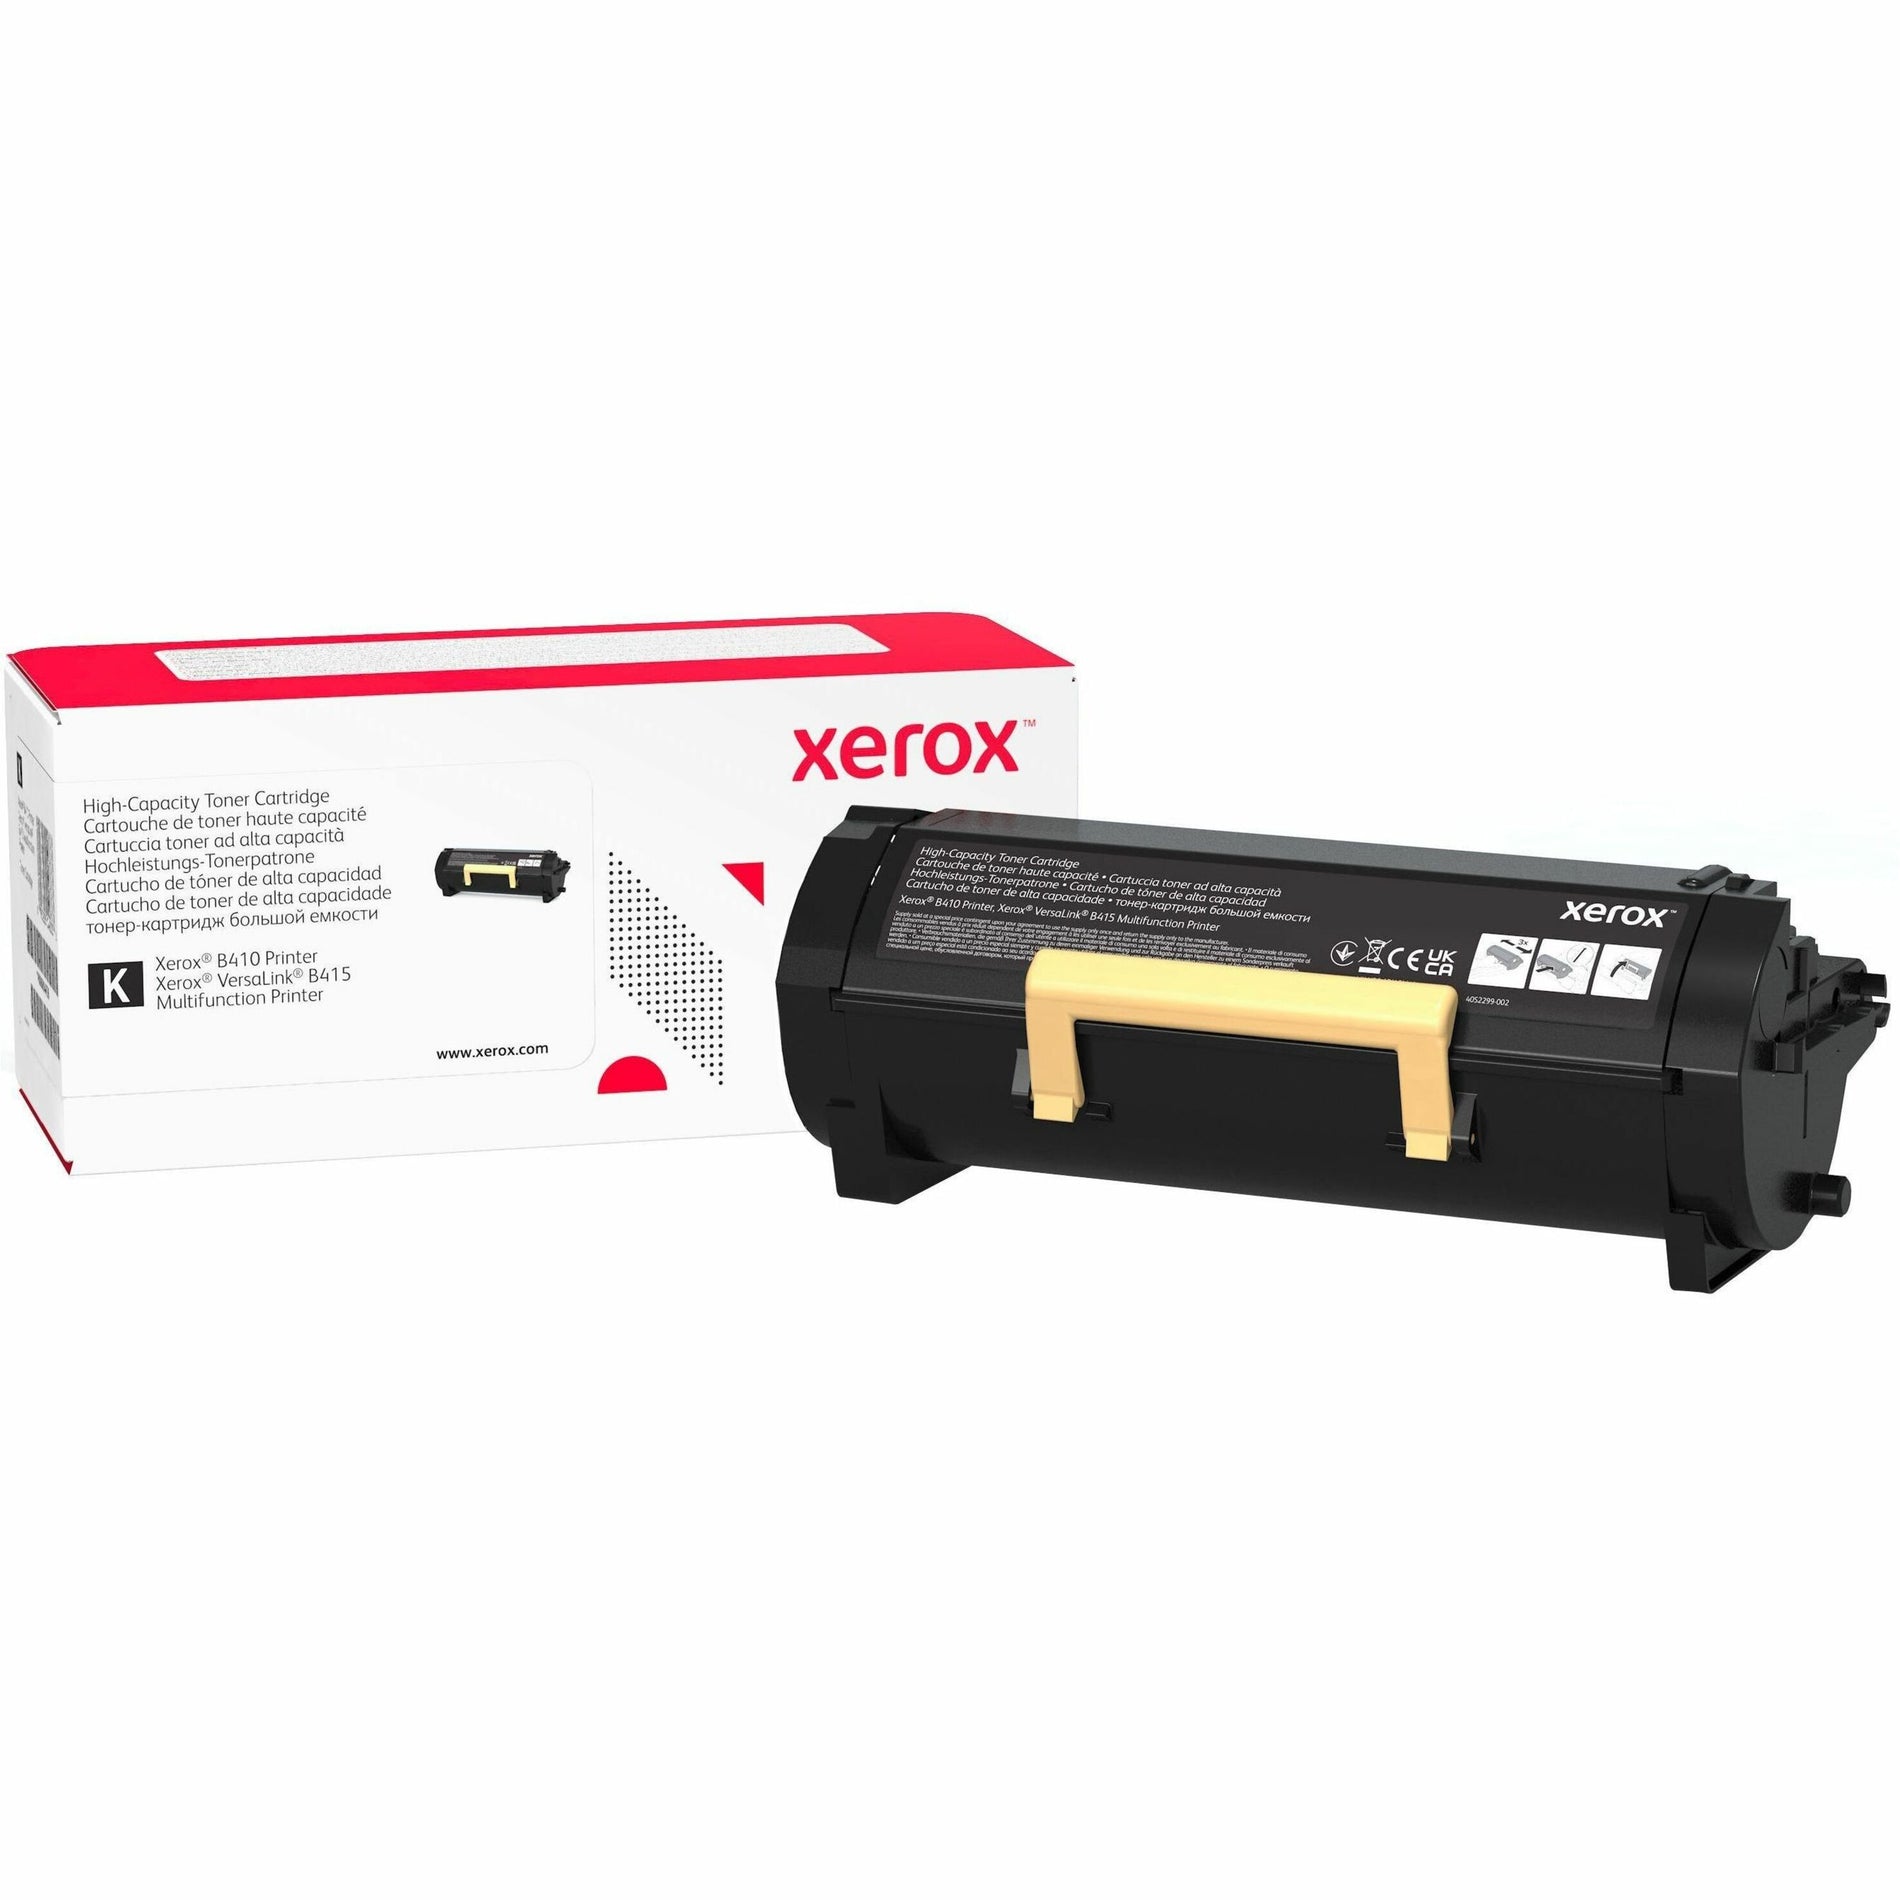 Xerox 006R04726 B410 Black High Capacity Toner Cartridge, Laser Printer